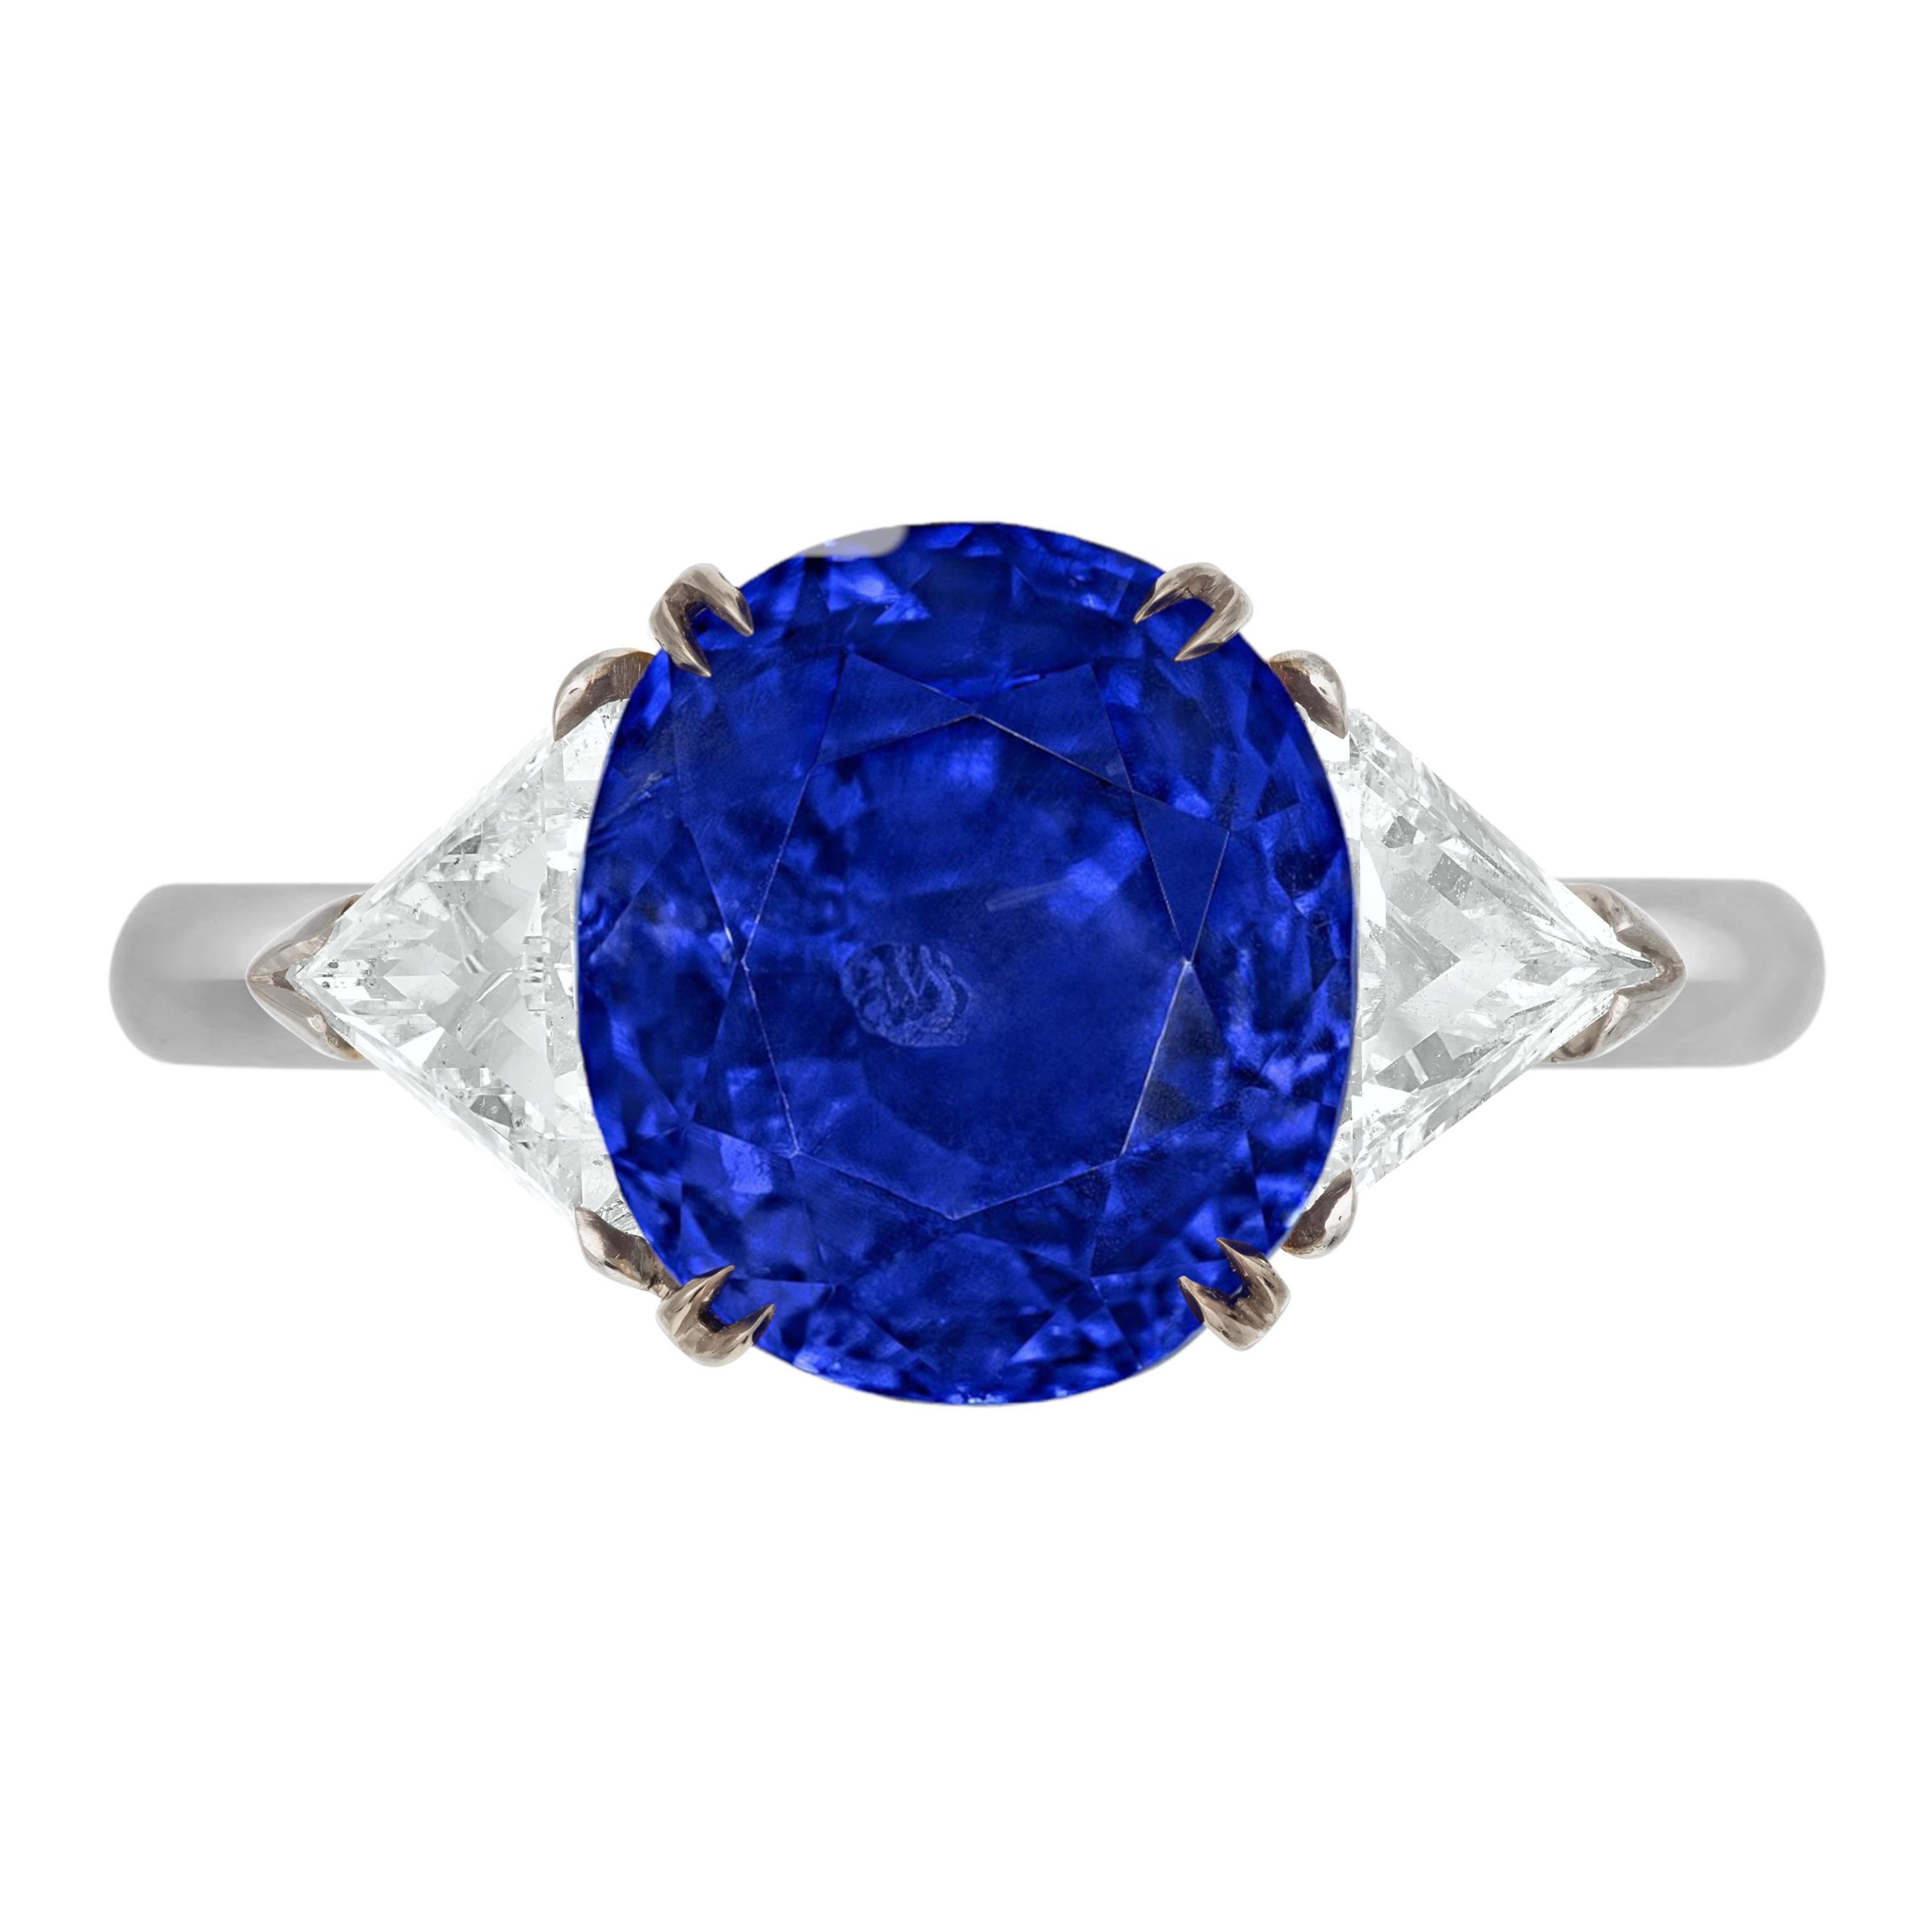 Important Gubelin SSEF AGL Certified 5.70 Carat Kashmir Blue Sapphire Ring